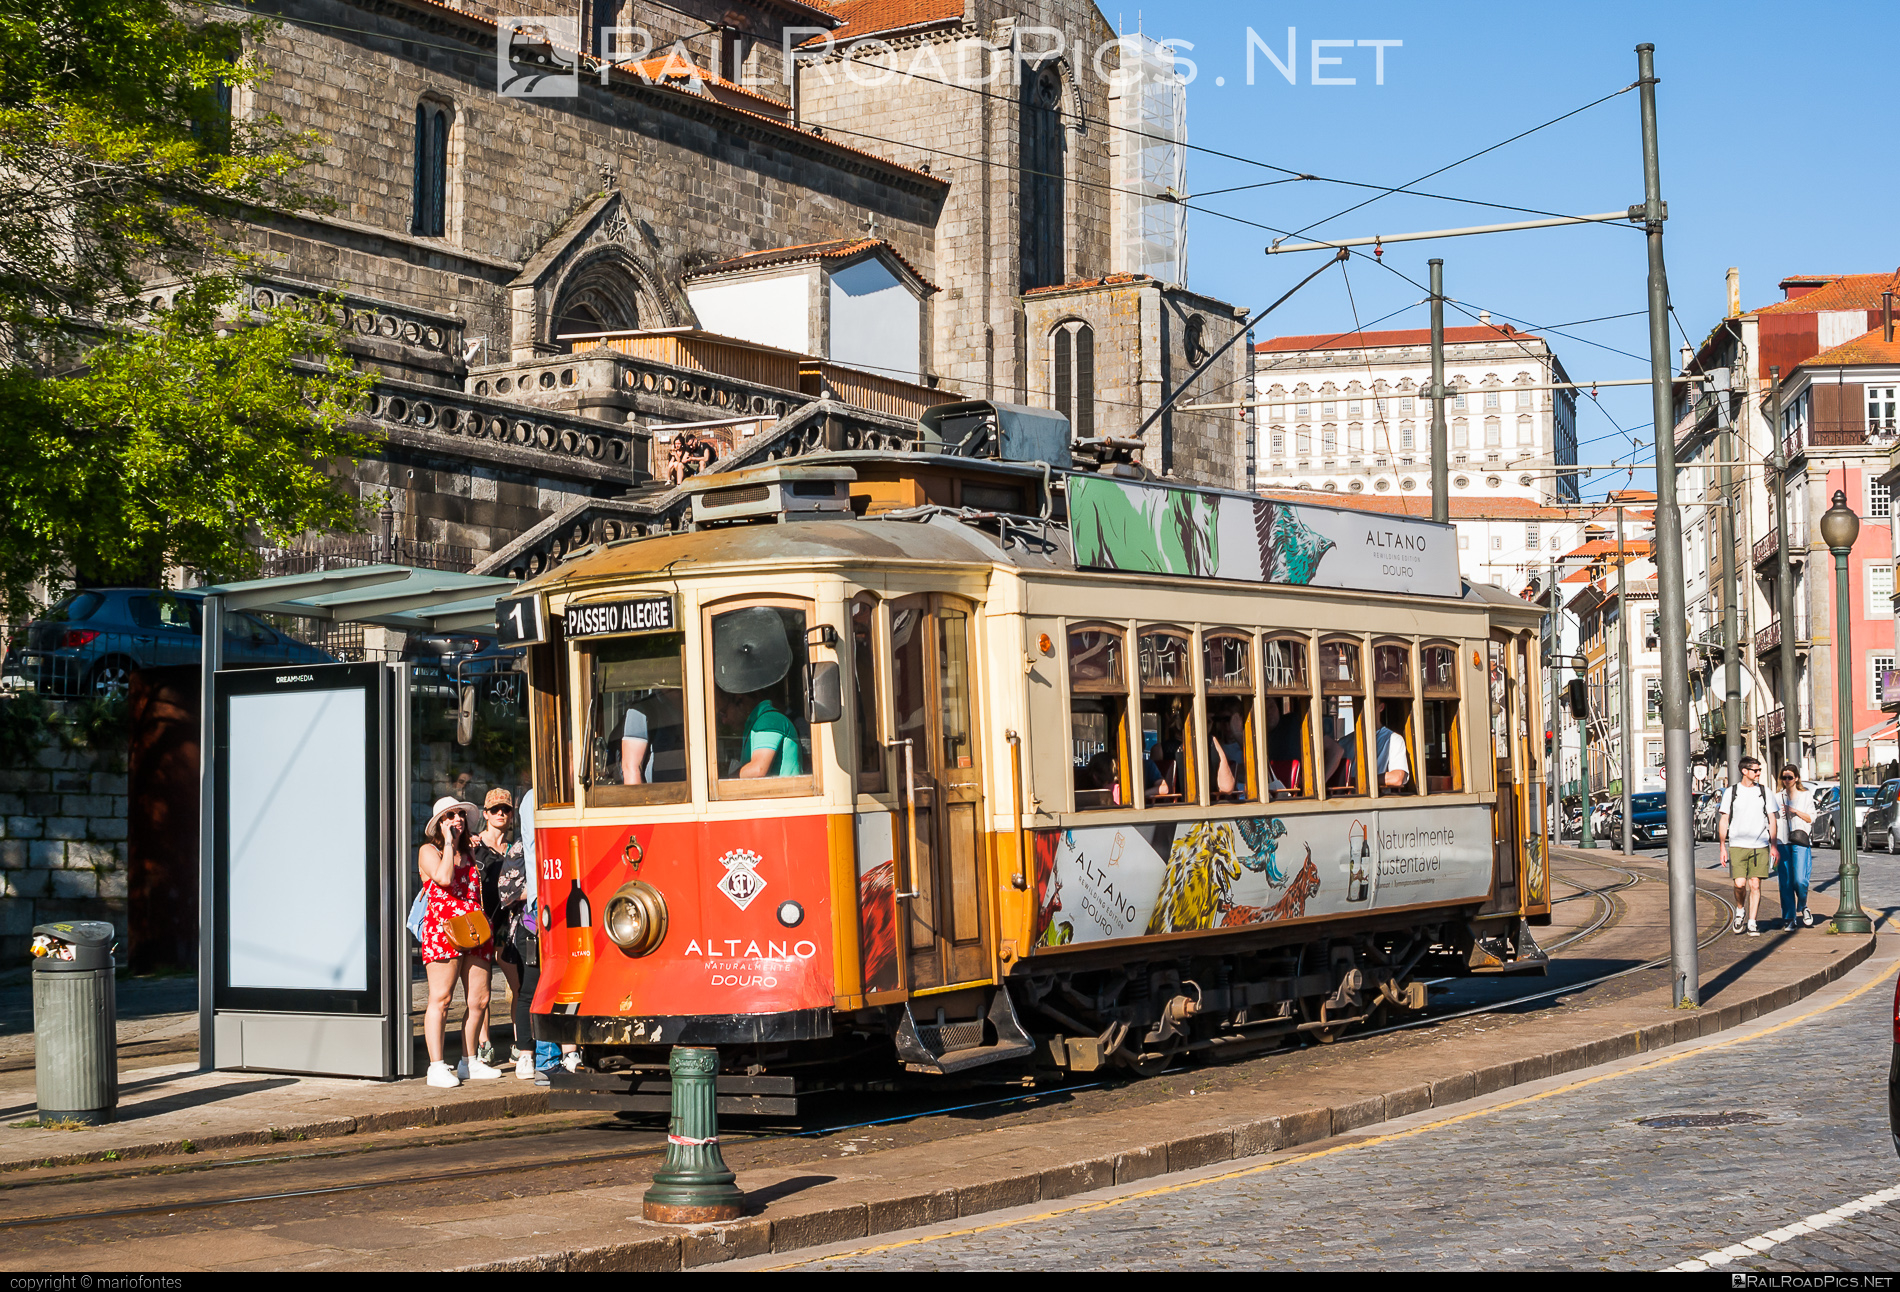 Brill 28 PS - 213 operated by Sociedade de Transportes Colectivos do Porto (STCP) #SociedadeDeTransportesColectivosDoPorto #brill #brill28ps #stcp #tram